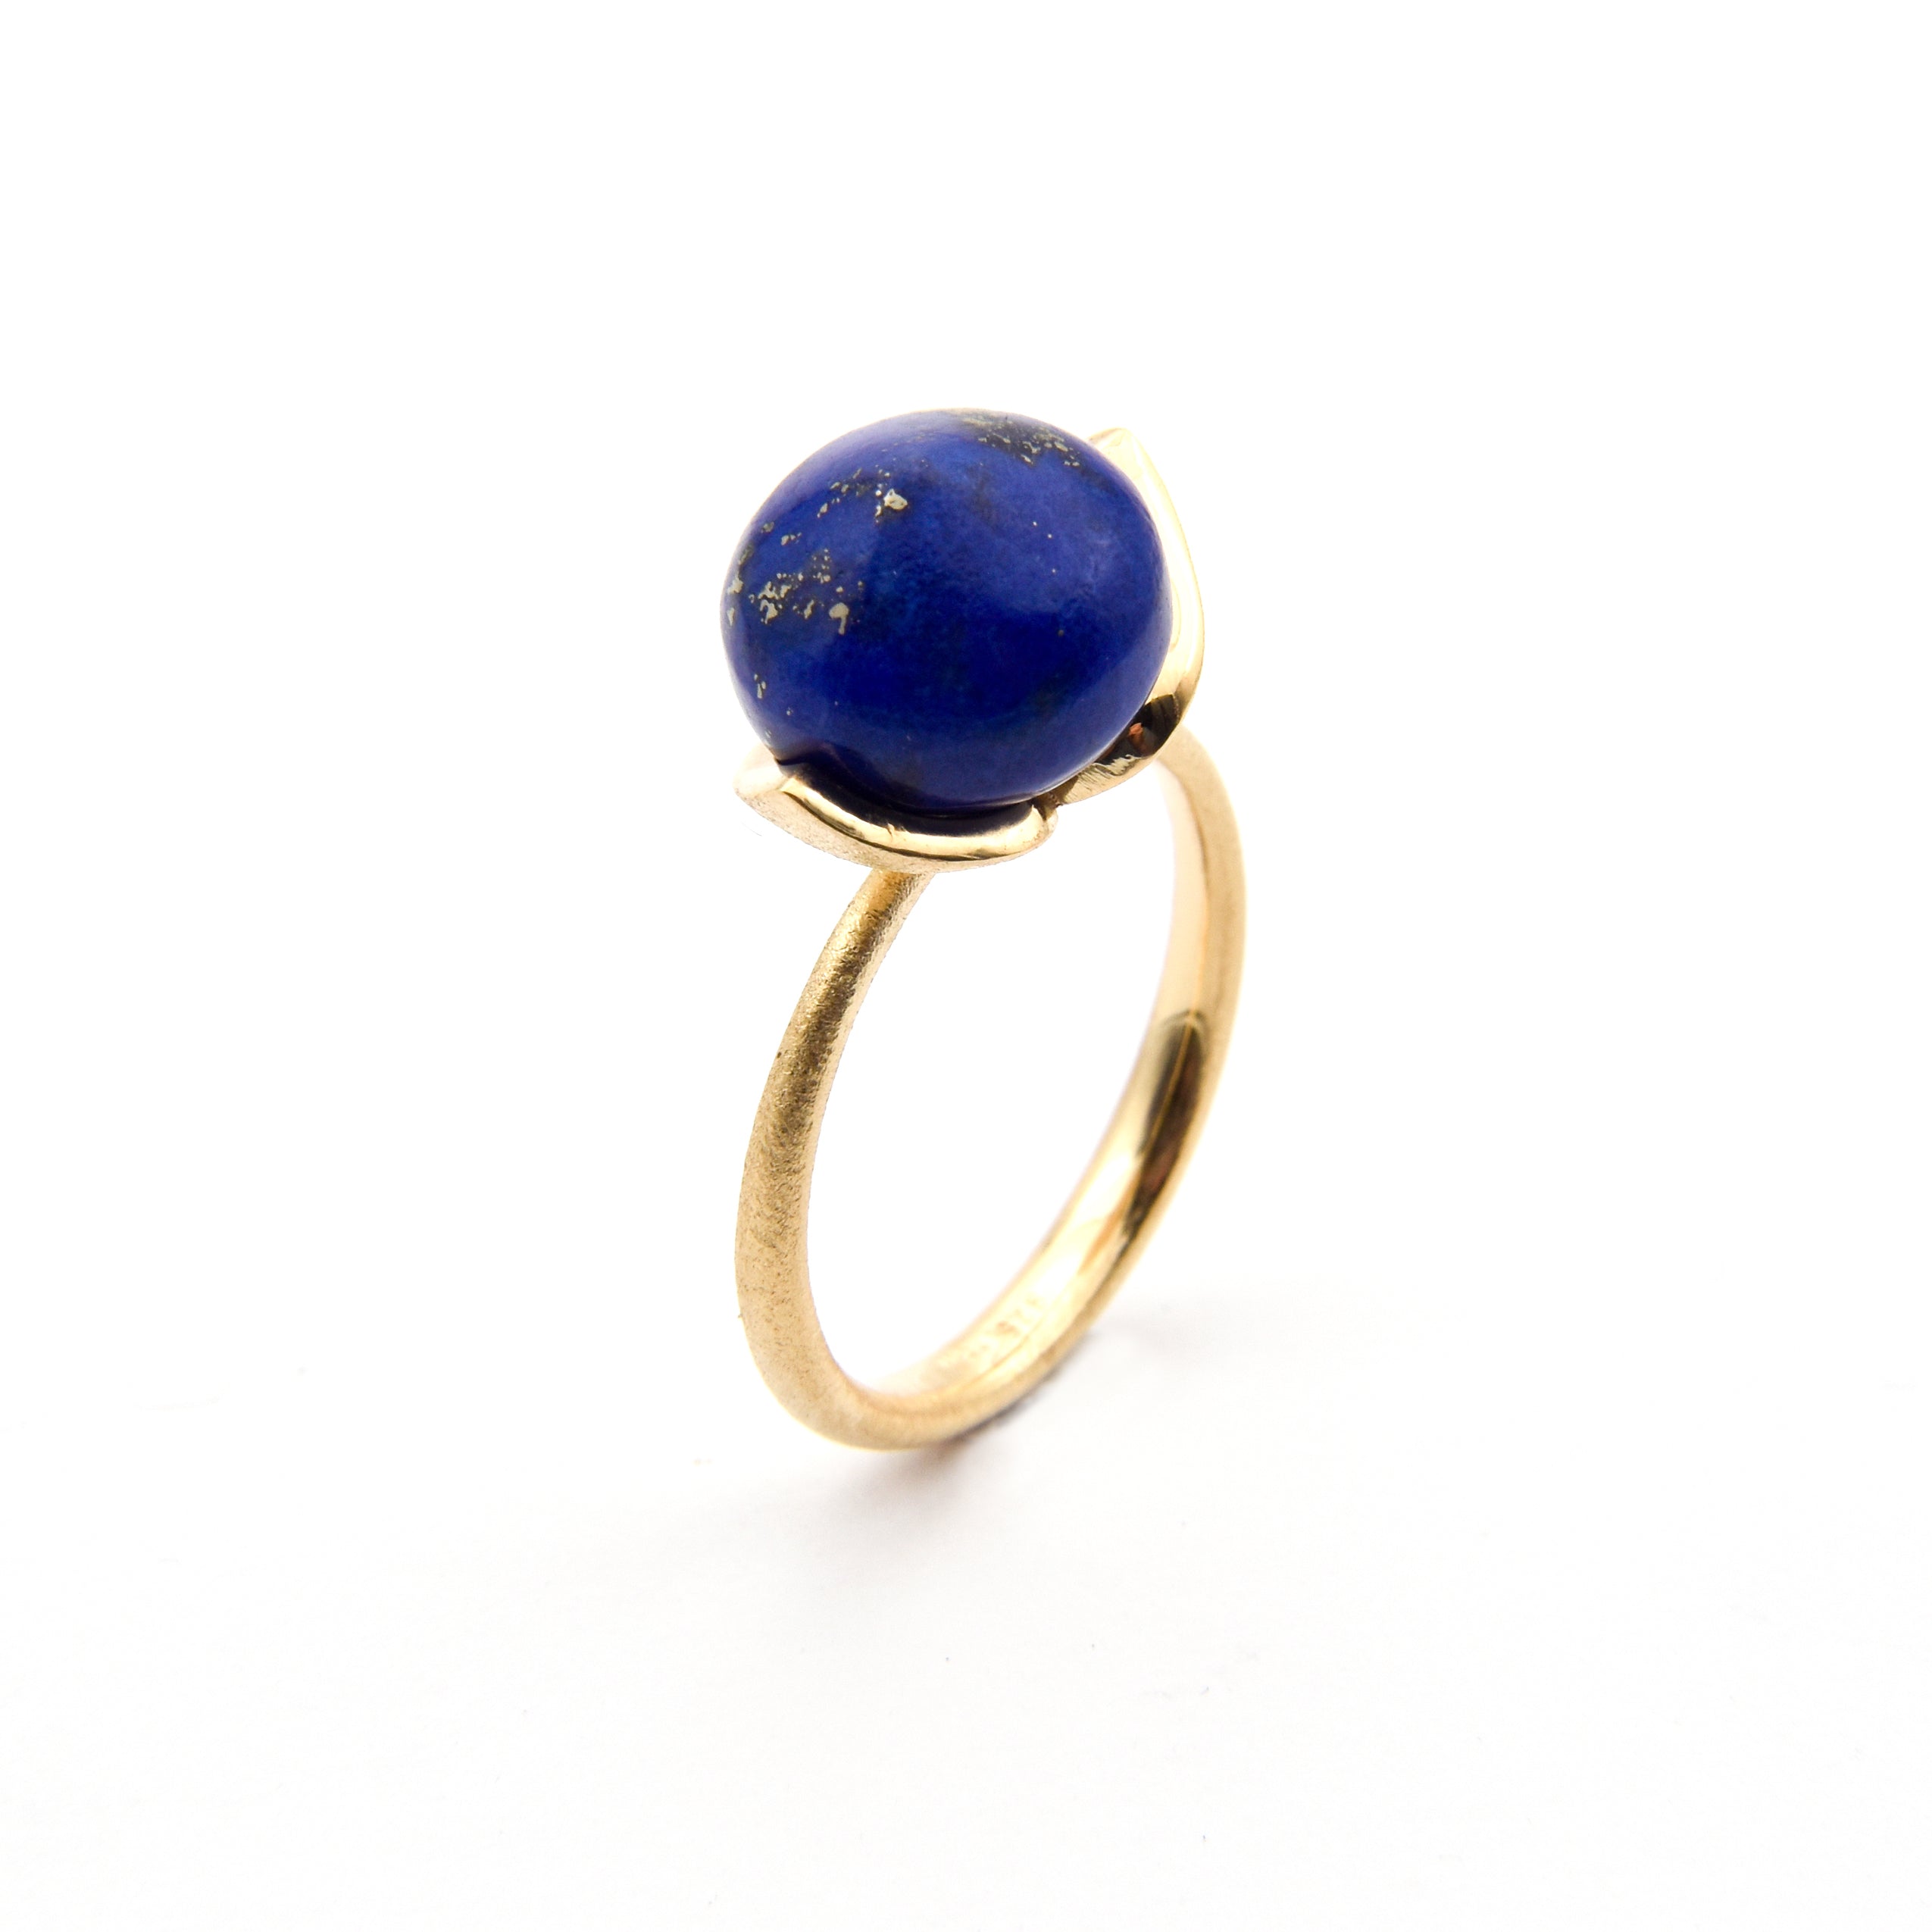 Dolce-ring "medium" med lapis lazuli 925/-